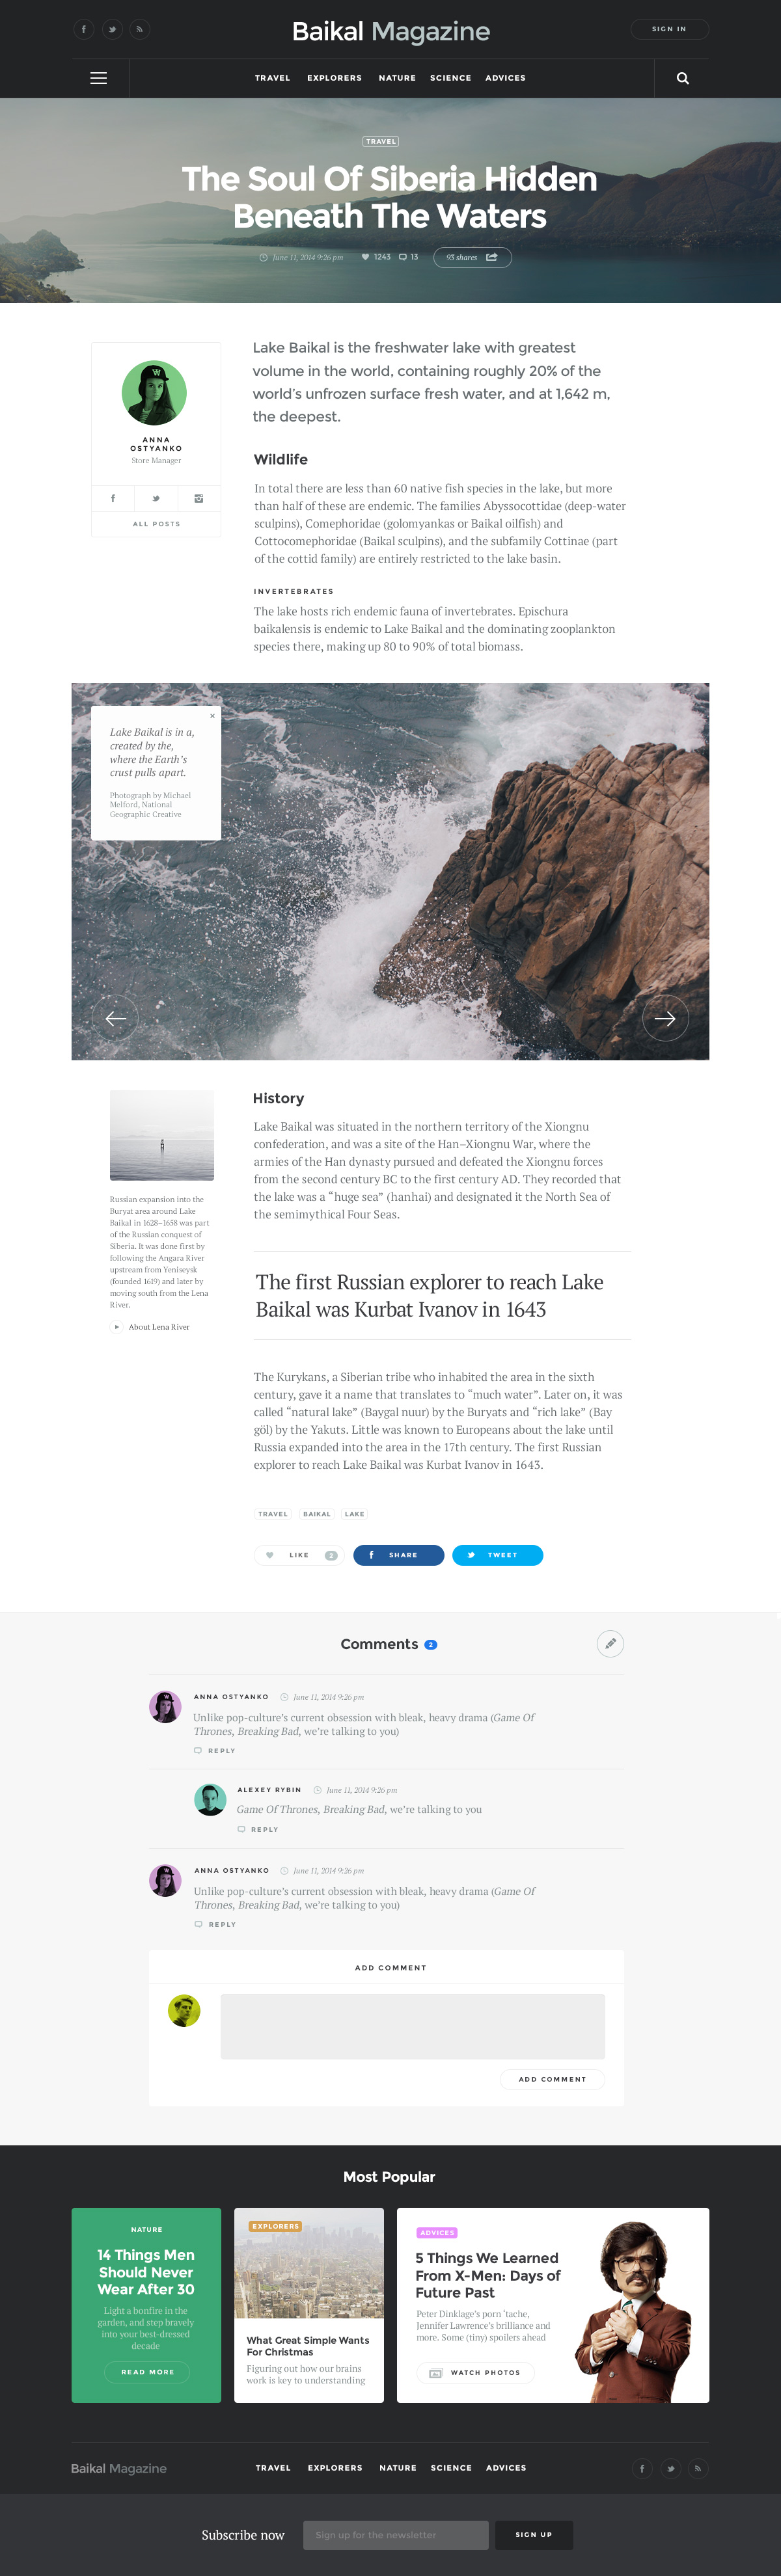 Baikal_Sample_Article